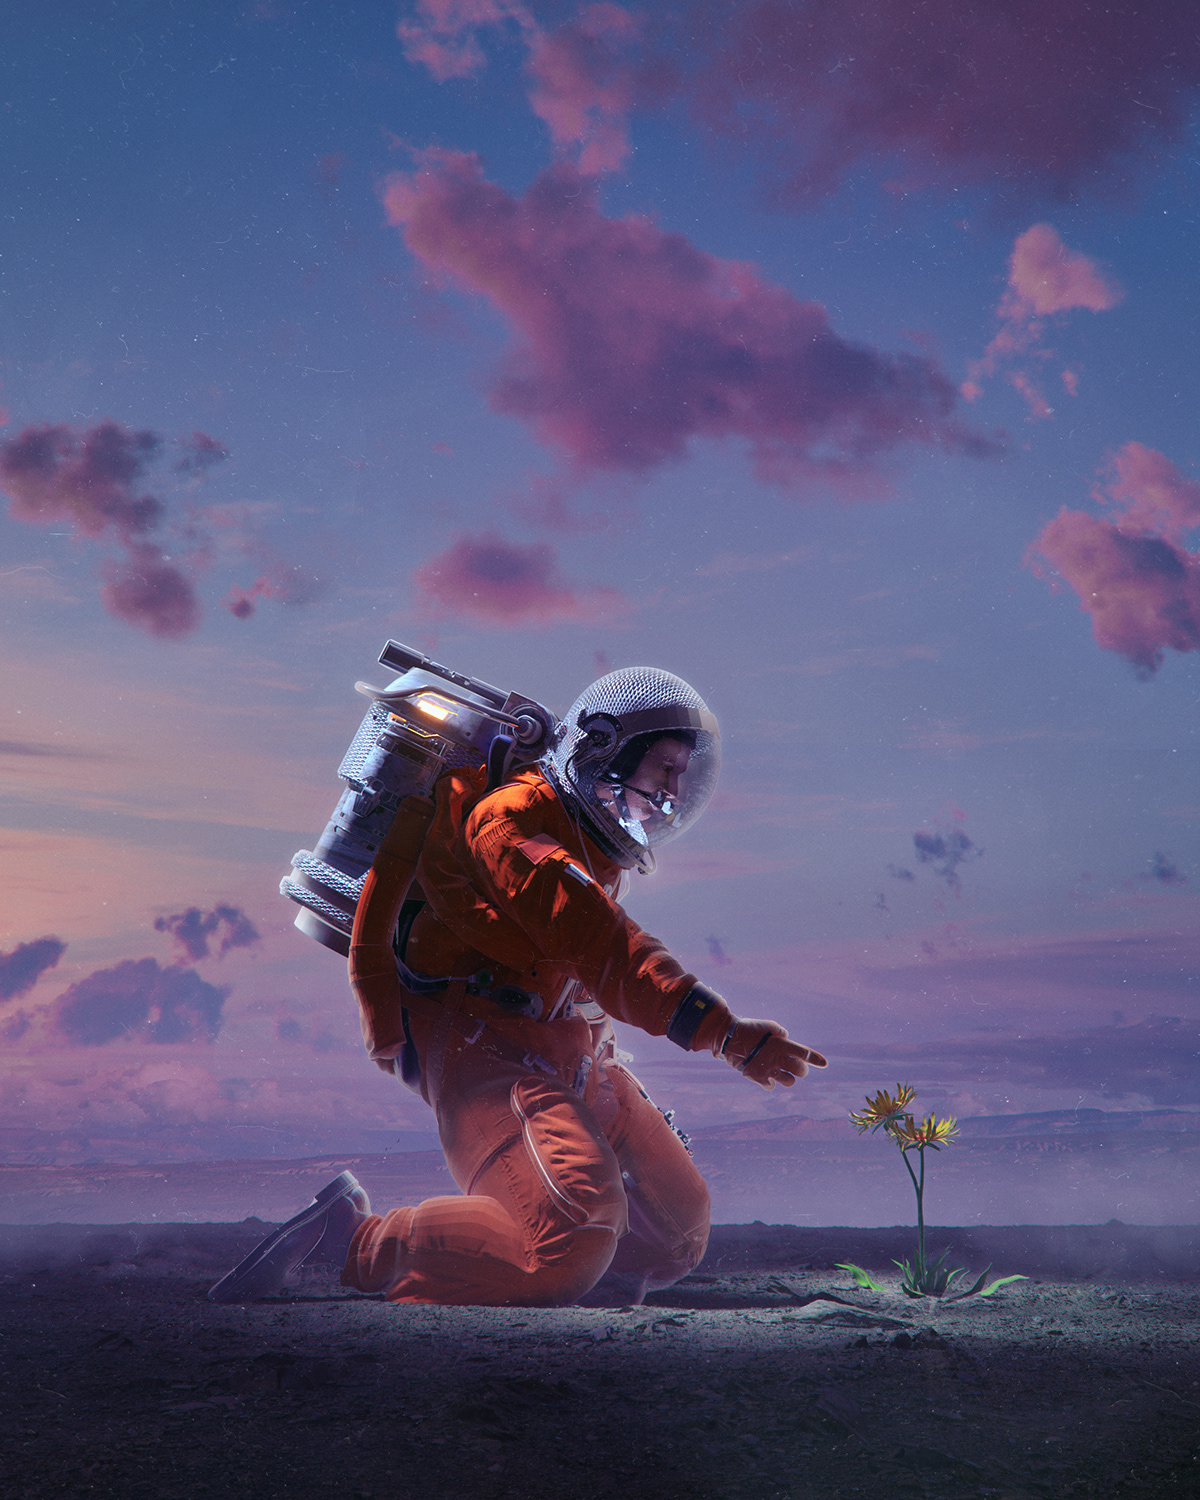 General 1200x1500 astronaut artwork sky science fiction plants kneeling